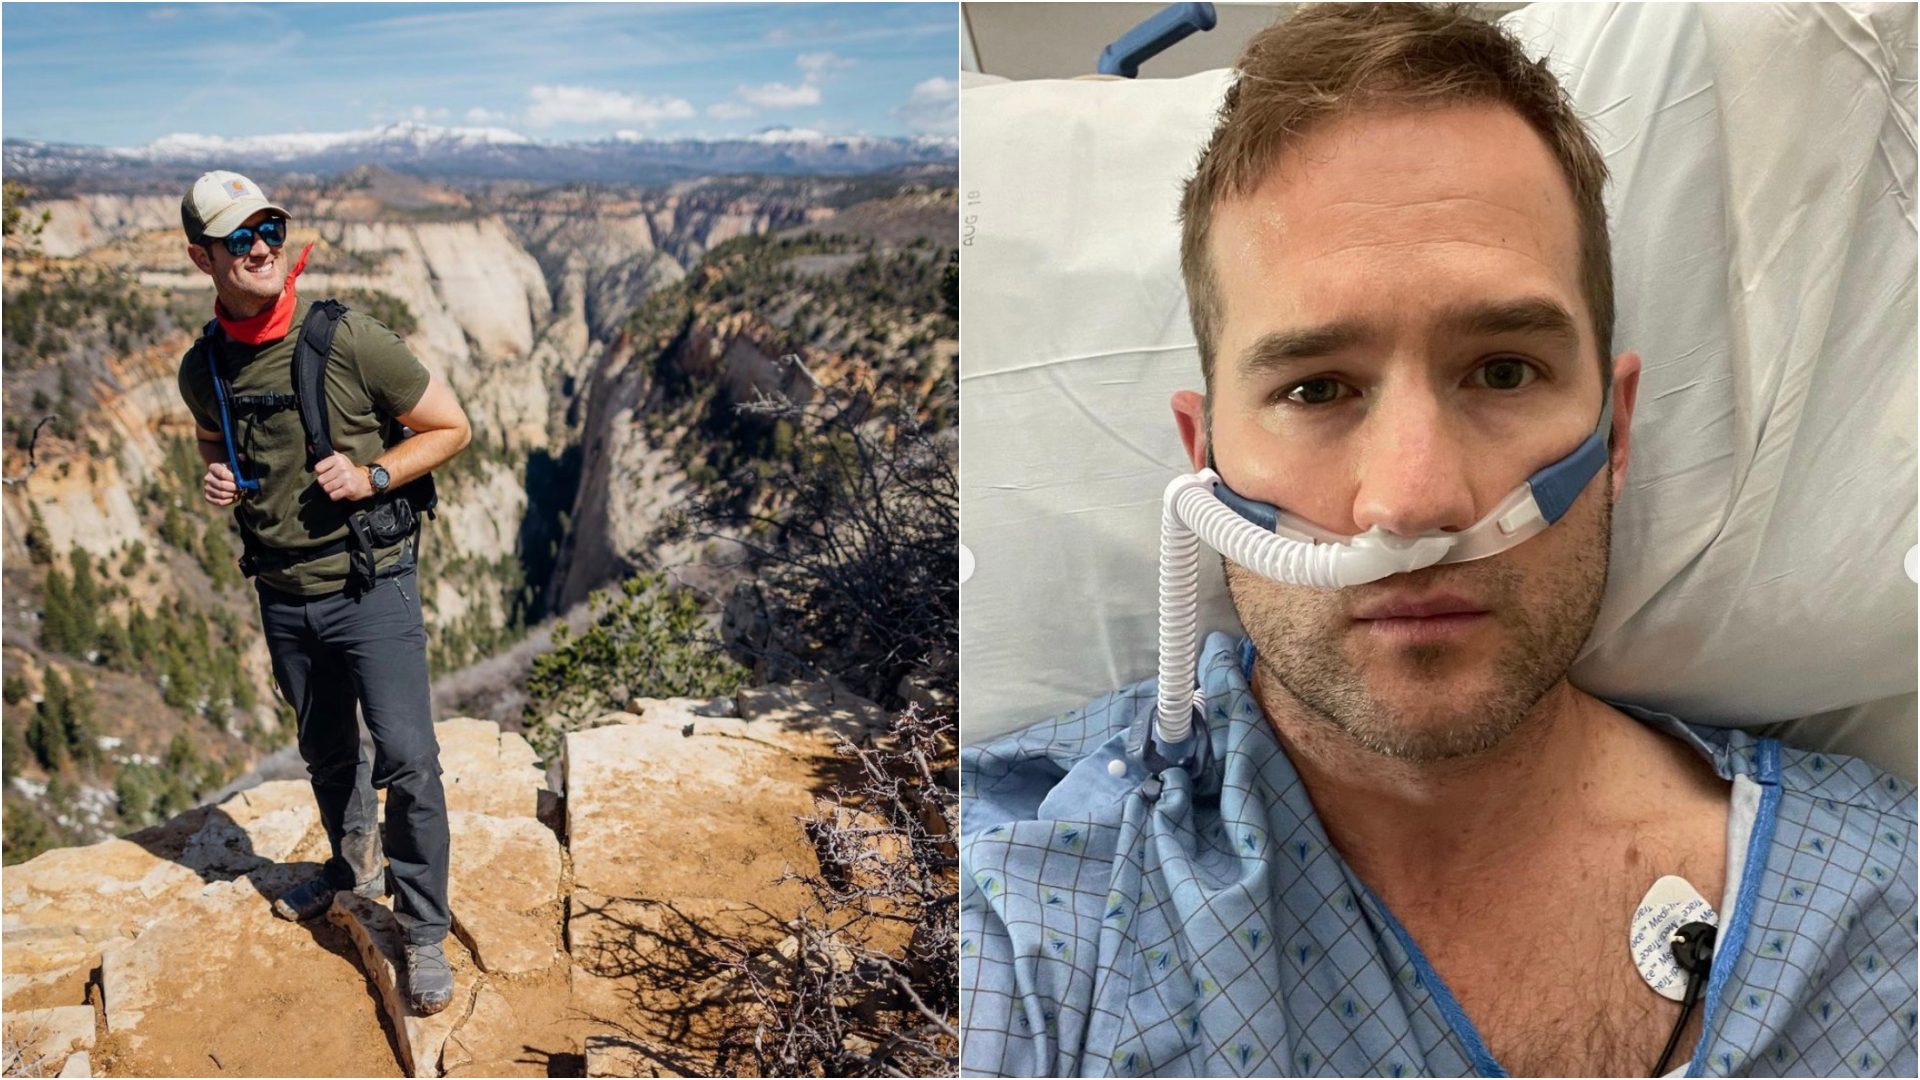 NBC News’ Correspondent Taken to ICU After Cardiac Emergency on Hike